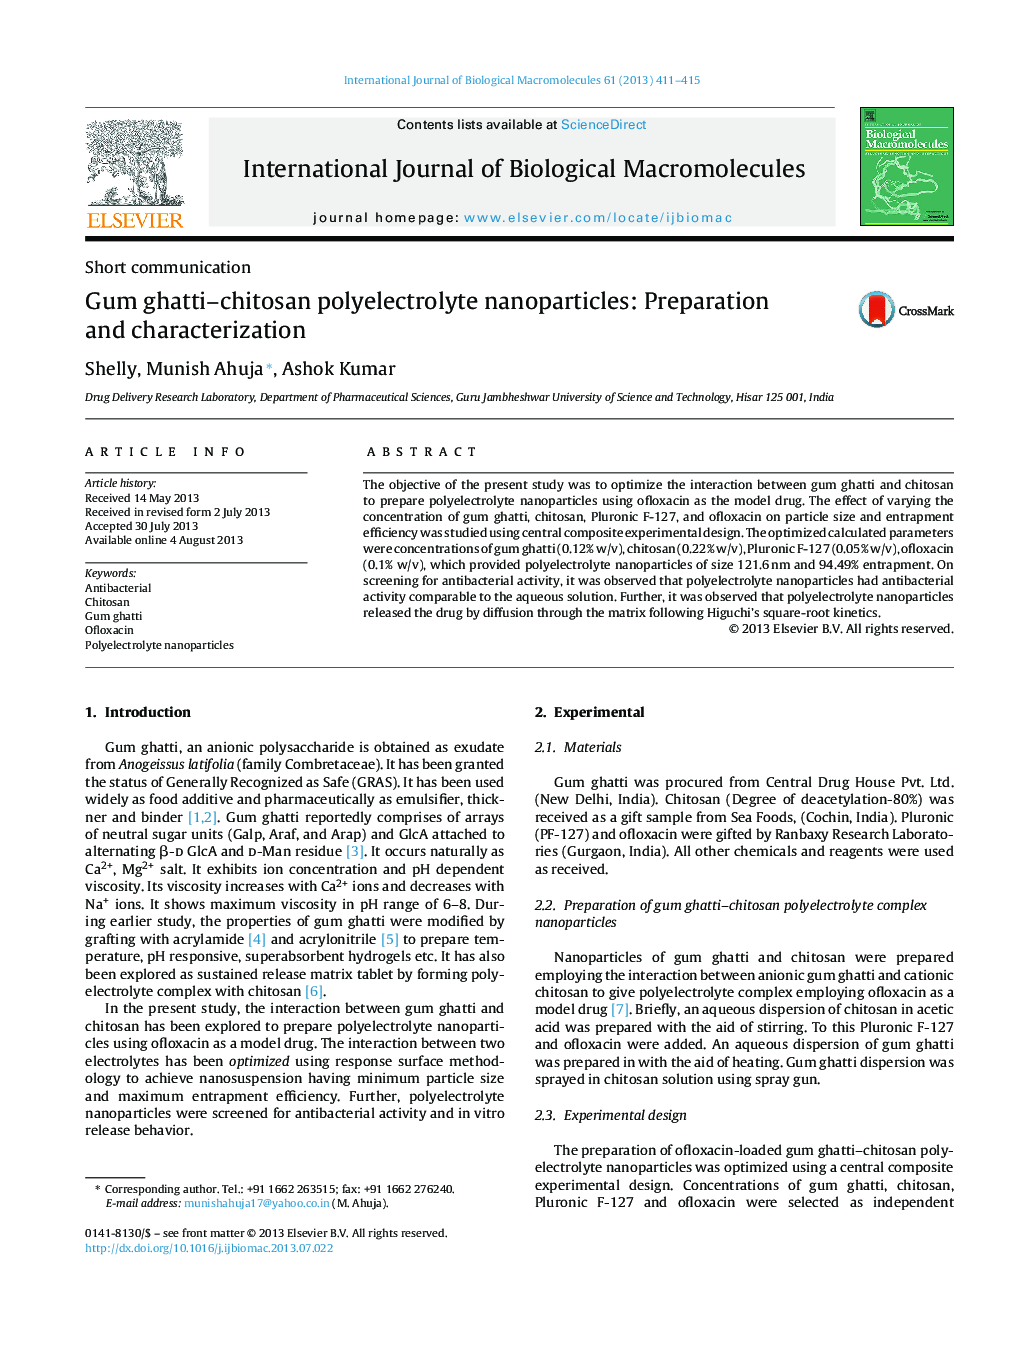 Gum ghatti–chitosan polyelectrolyte nanoparticles: Preparation and characterization